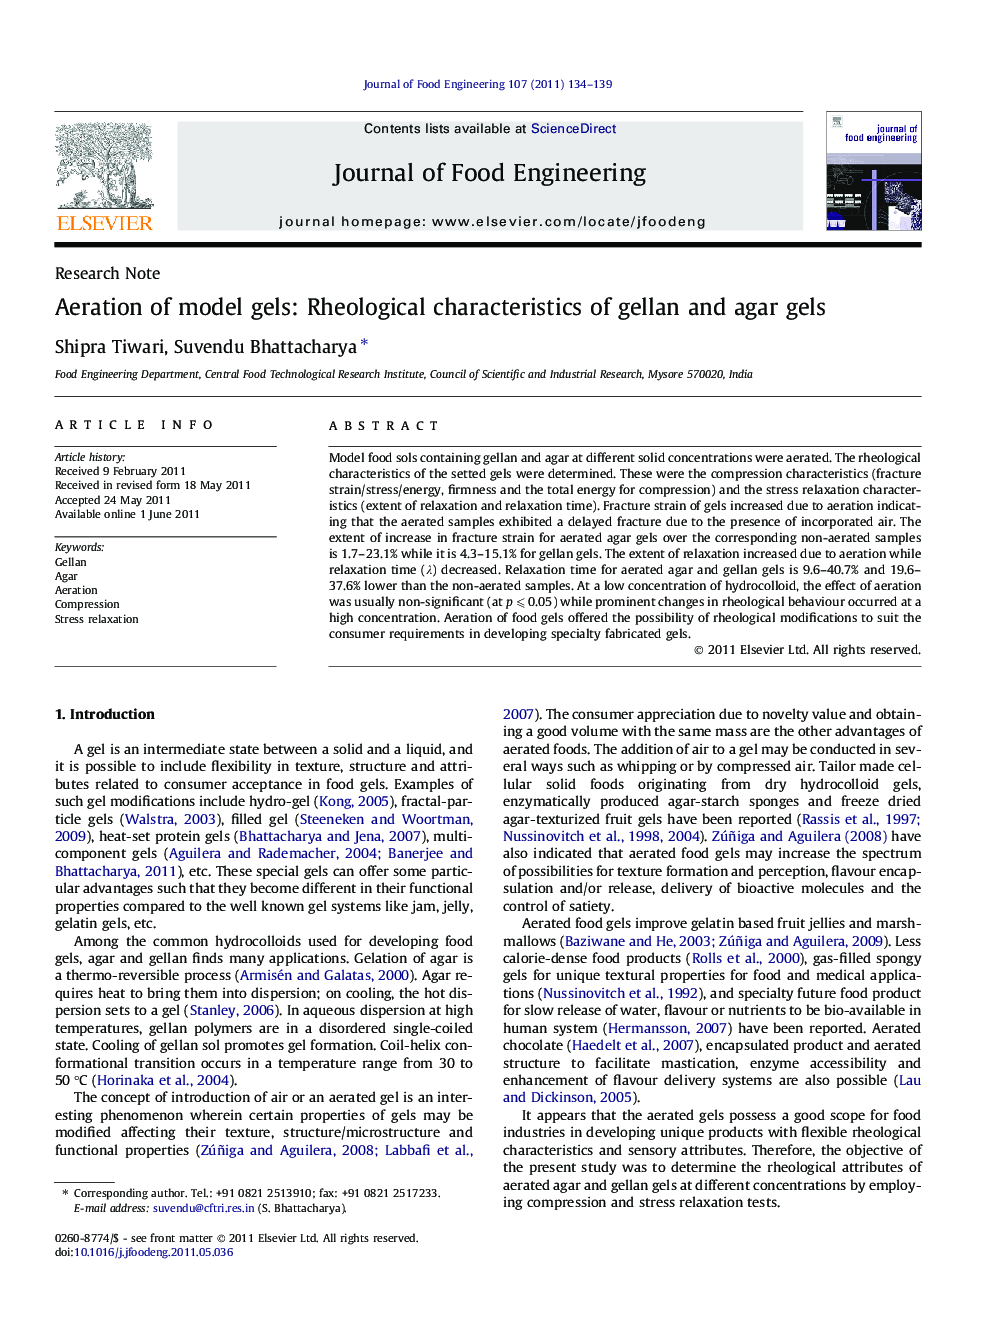 Aeration of model gels: Rheological characteristics of gellan and agar gels